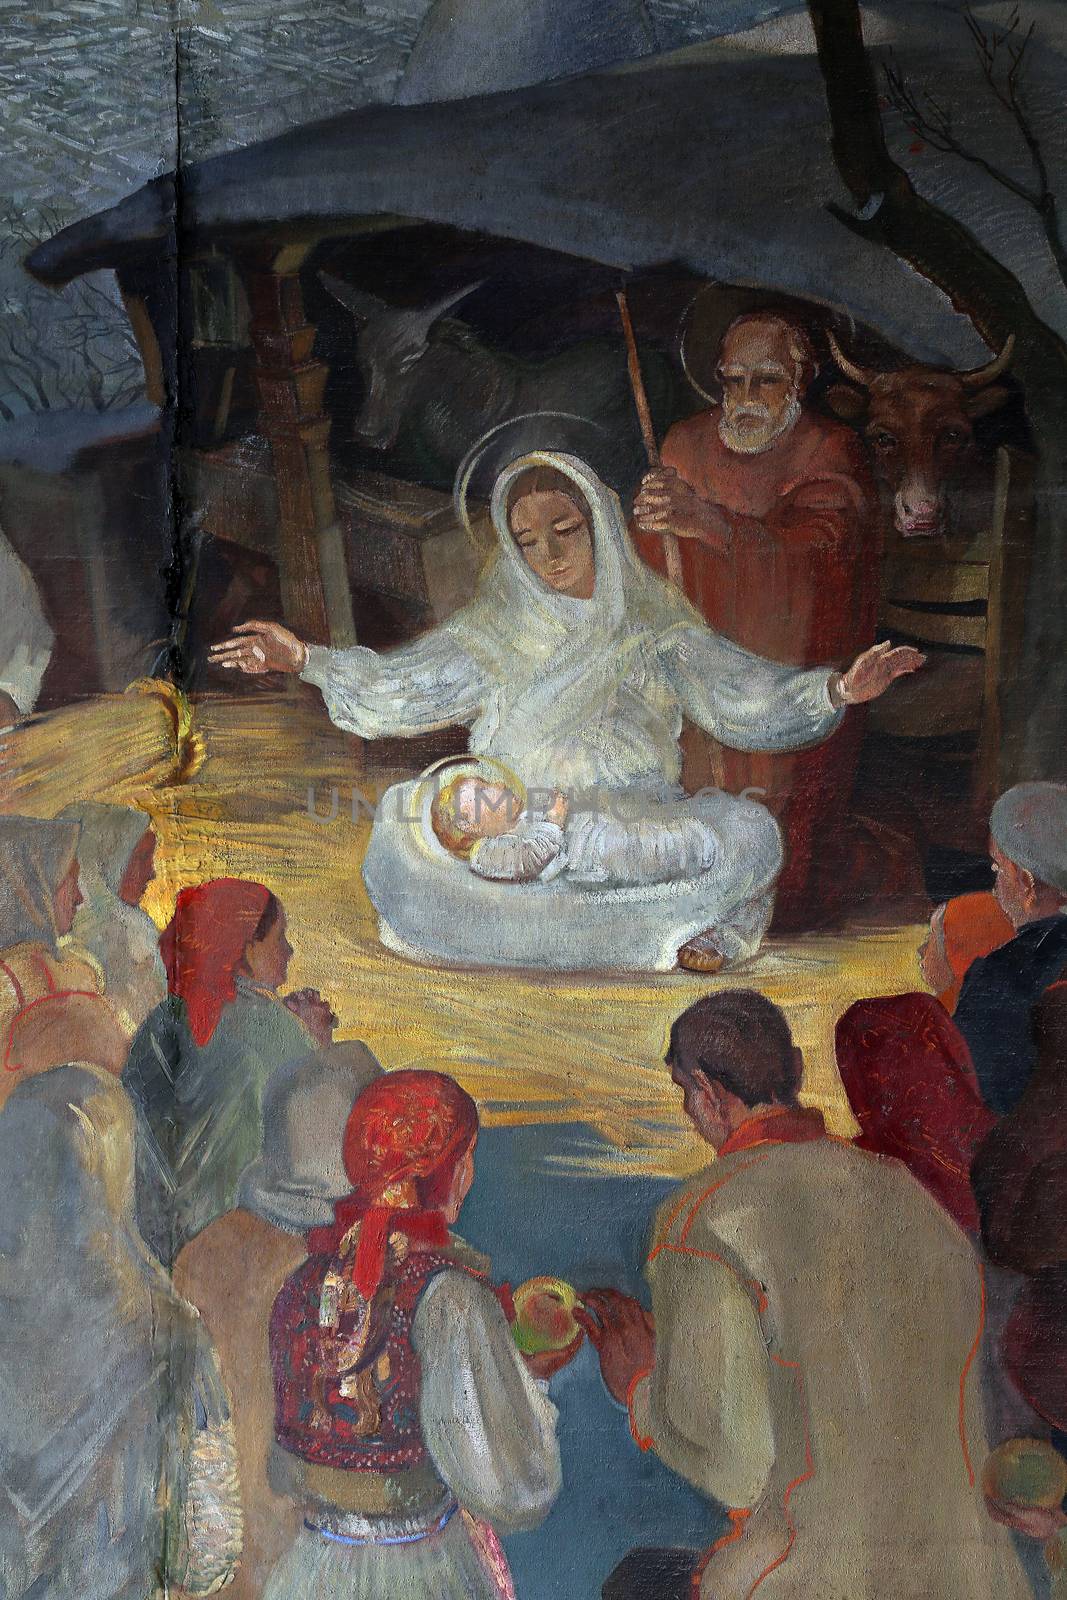 Birth of Jesus by atlas